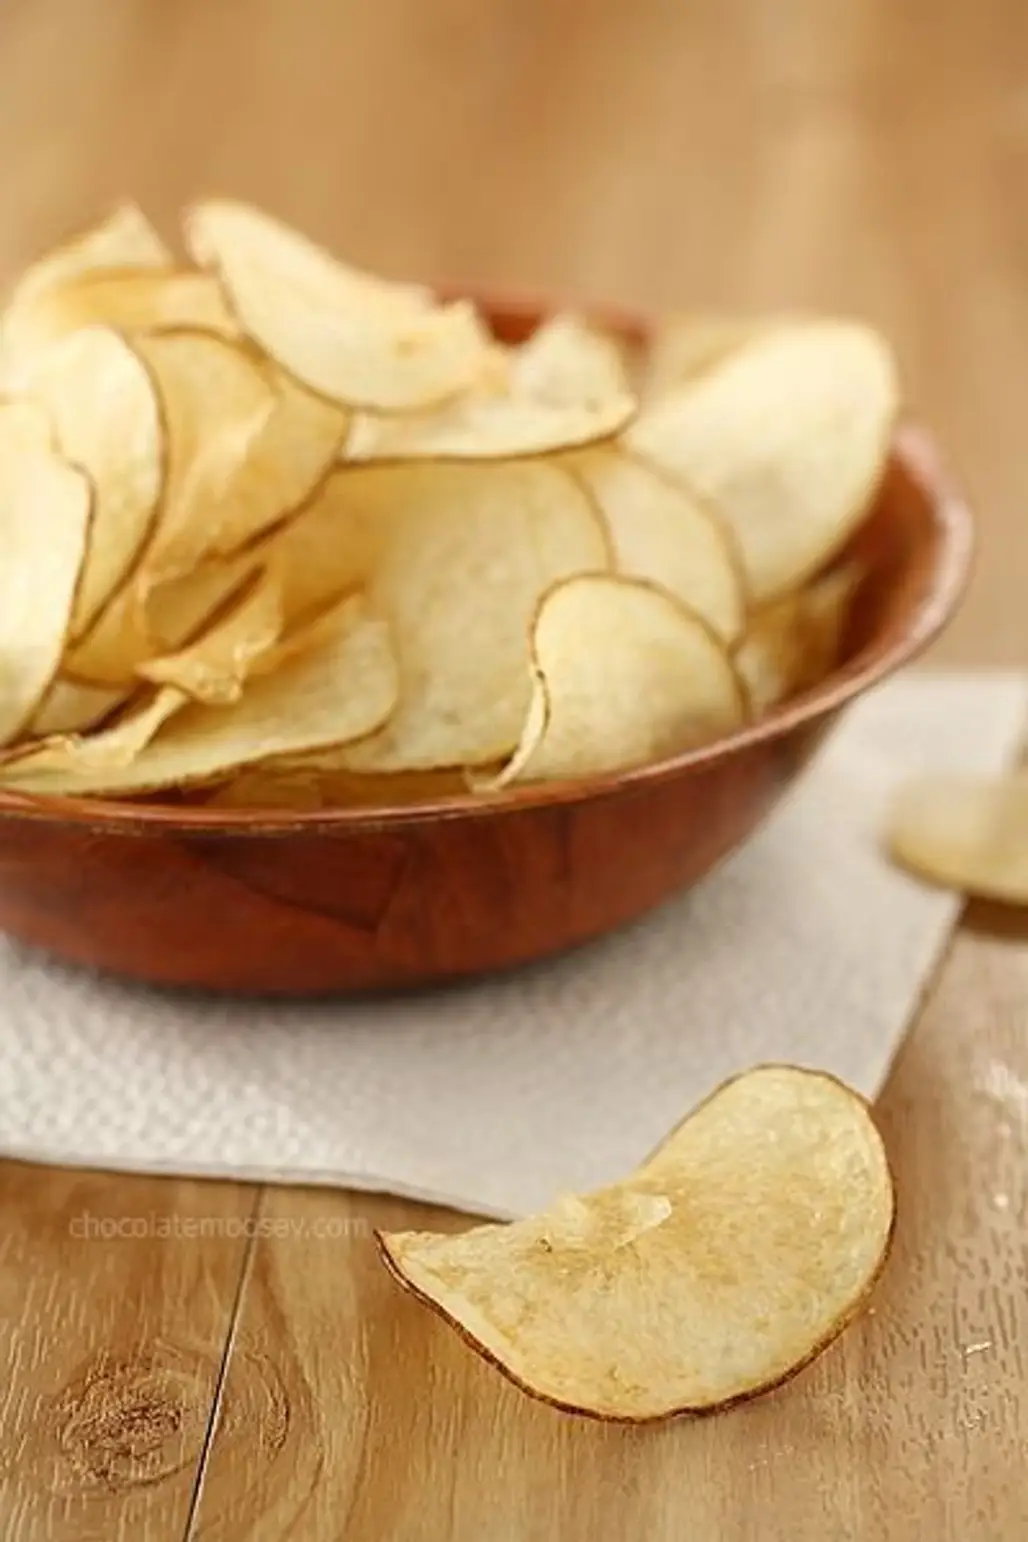 Snack on 1 Oz. of Baked Potato Chips Instead of Regular Chips